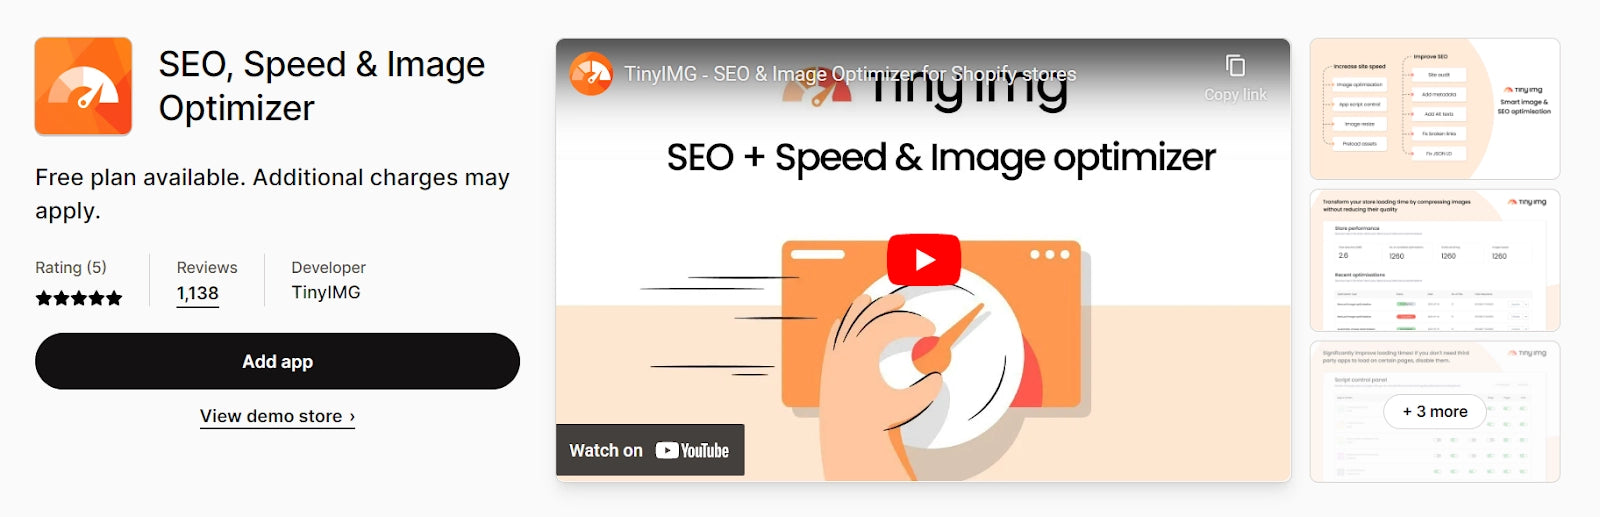 SEO, Speed & Image Optimizer Shopify App